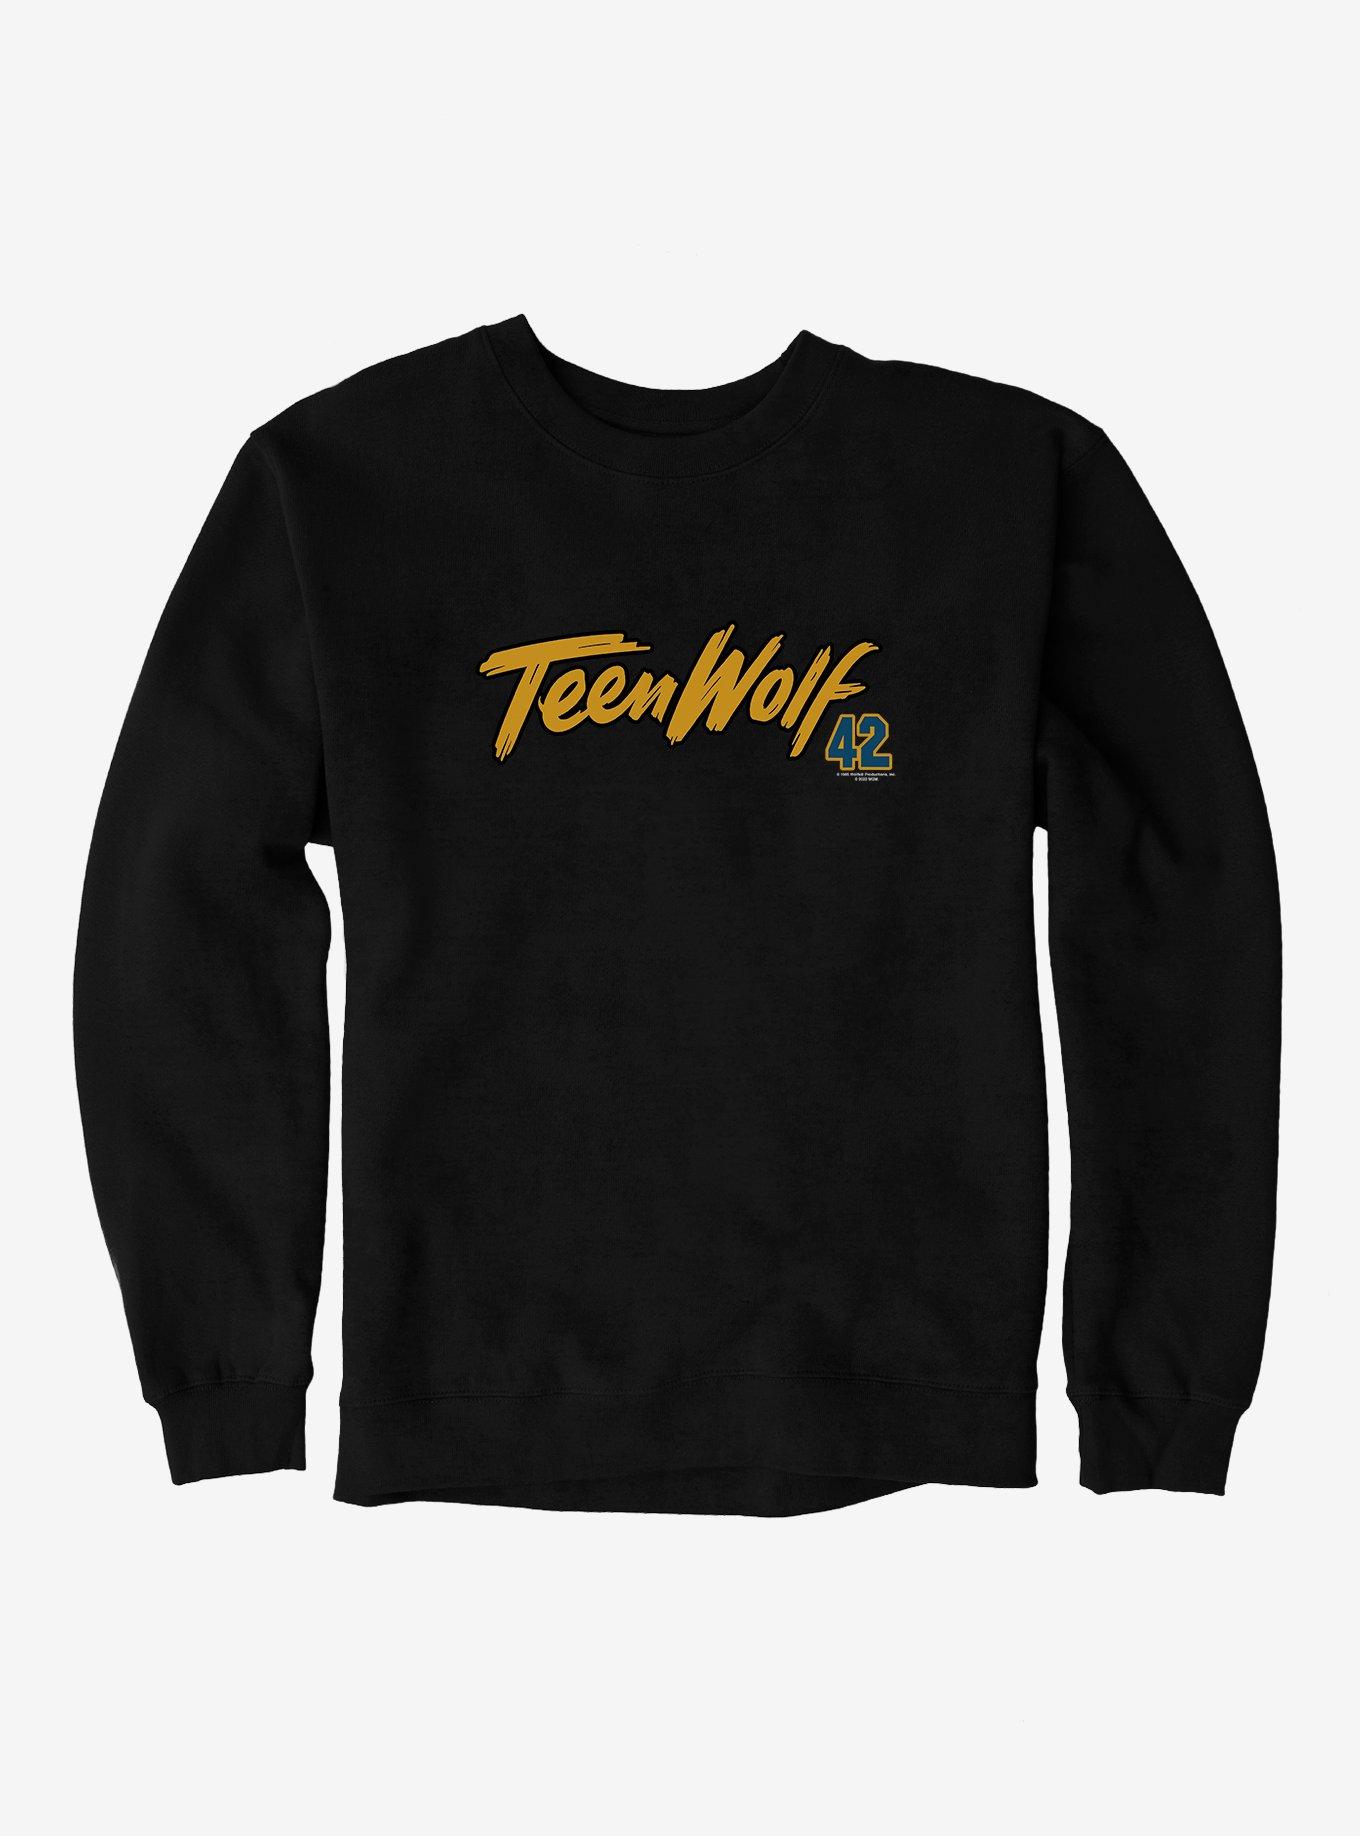 Teen Wolf Teenwolf 42 Sweatshirt, BLACK, hi-res